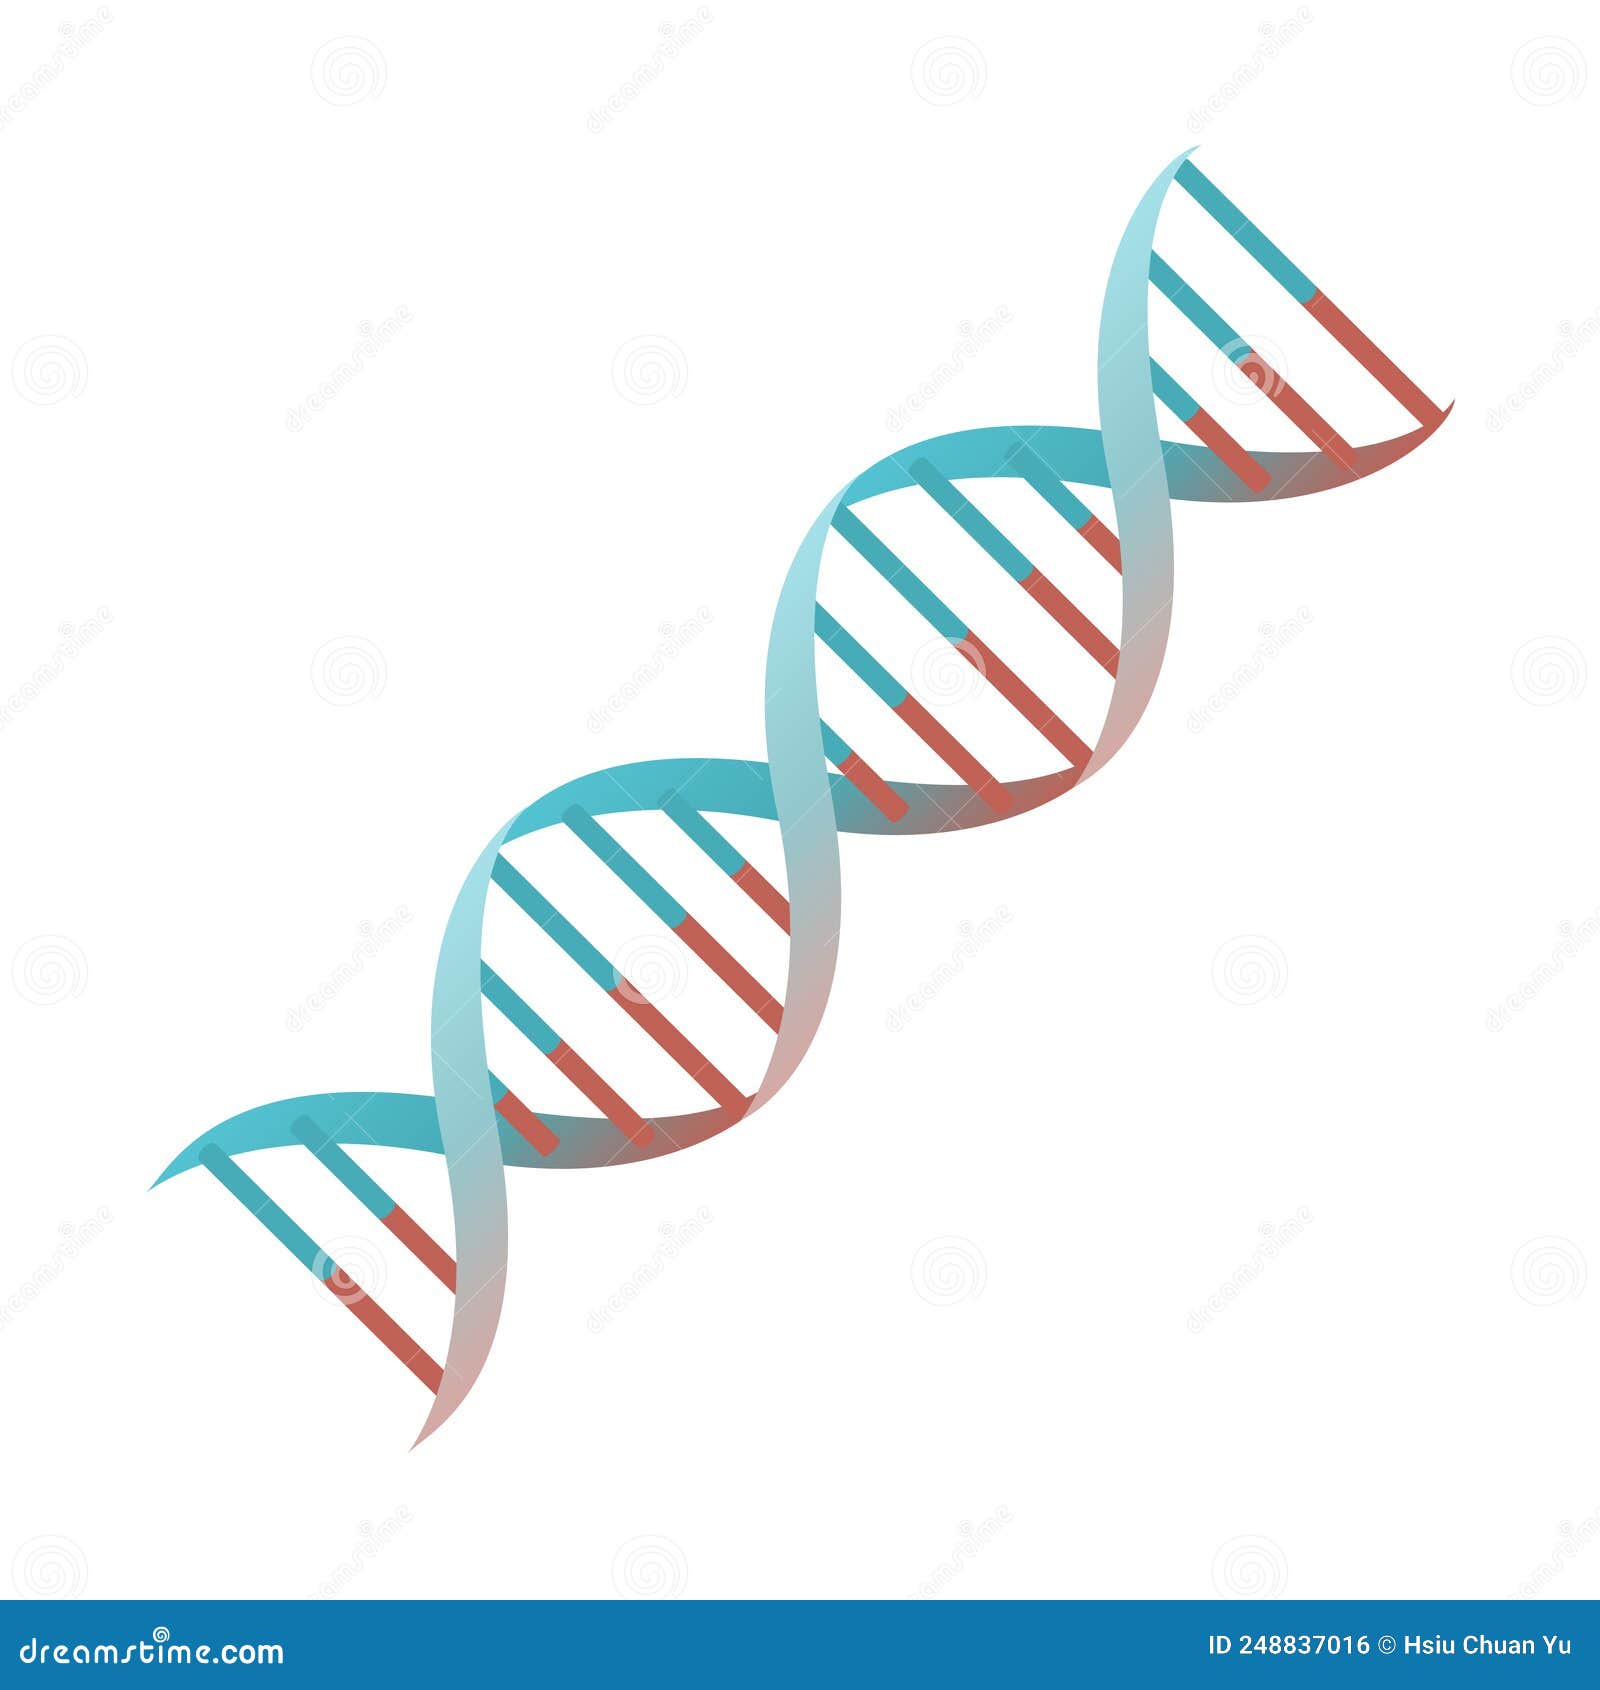 cartoon dna spiral genes   object 